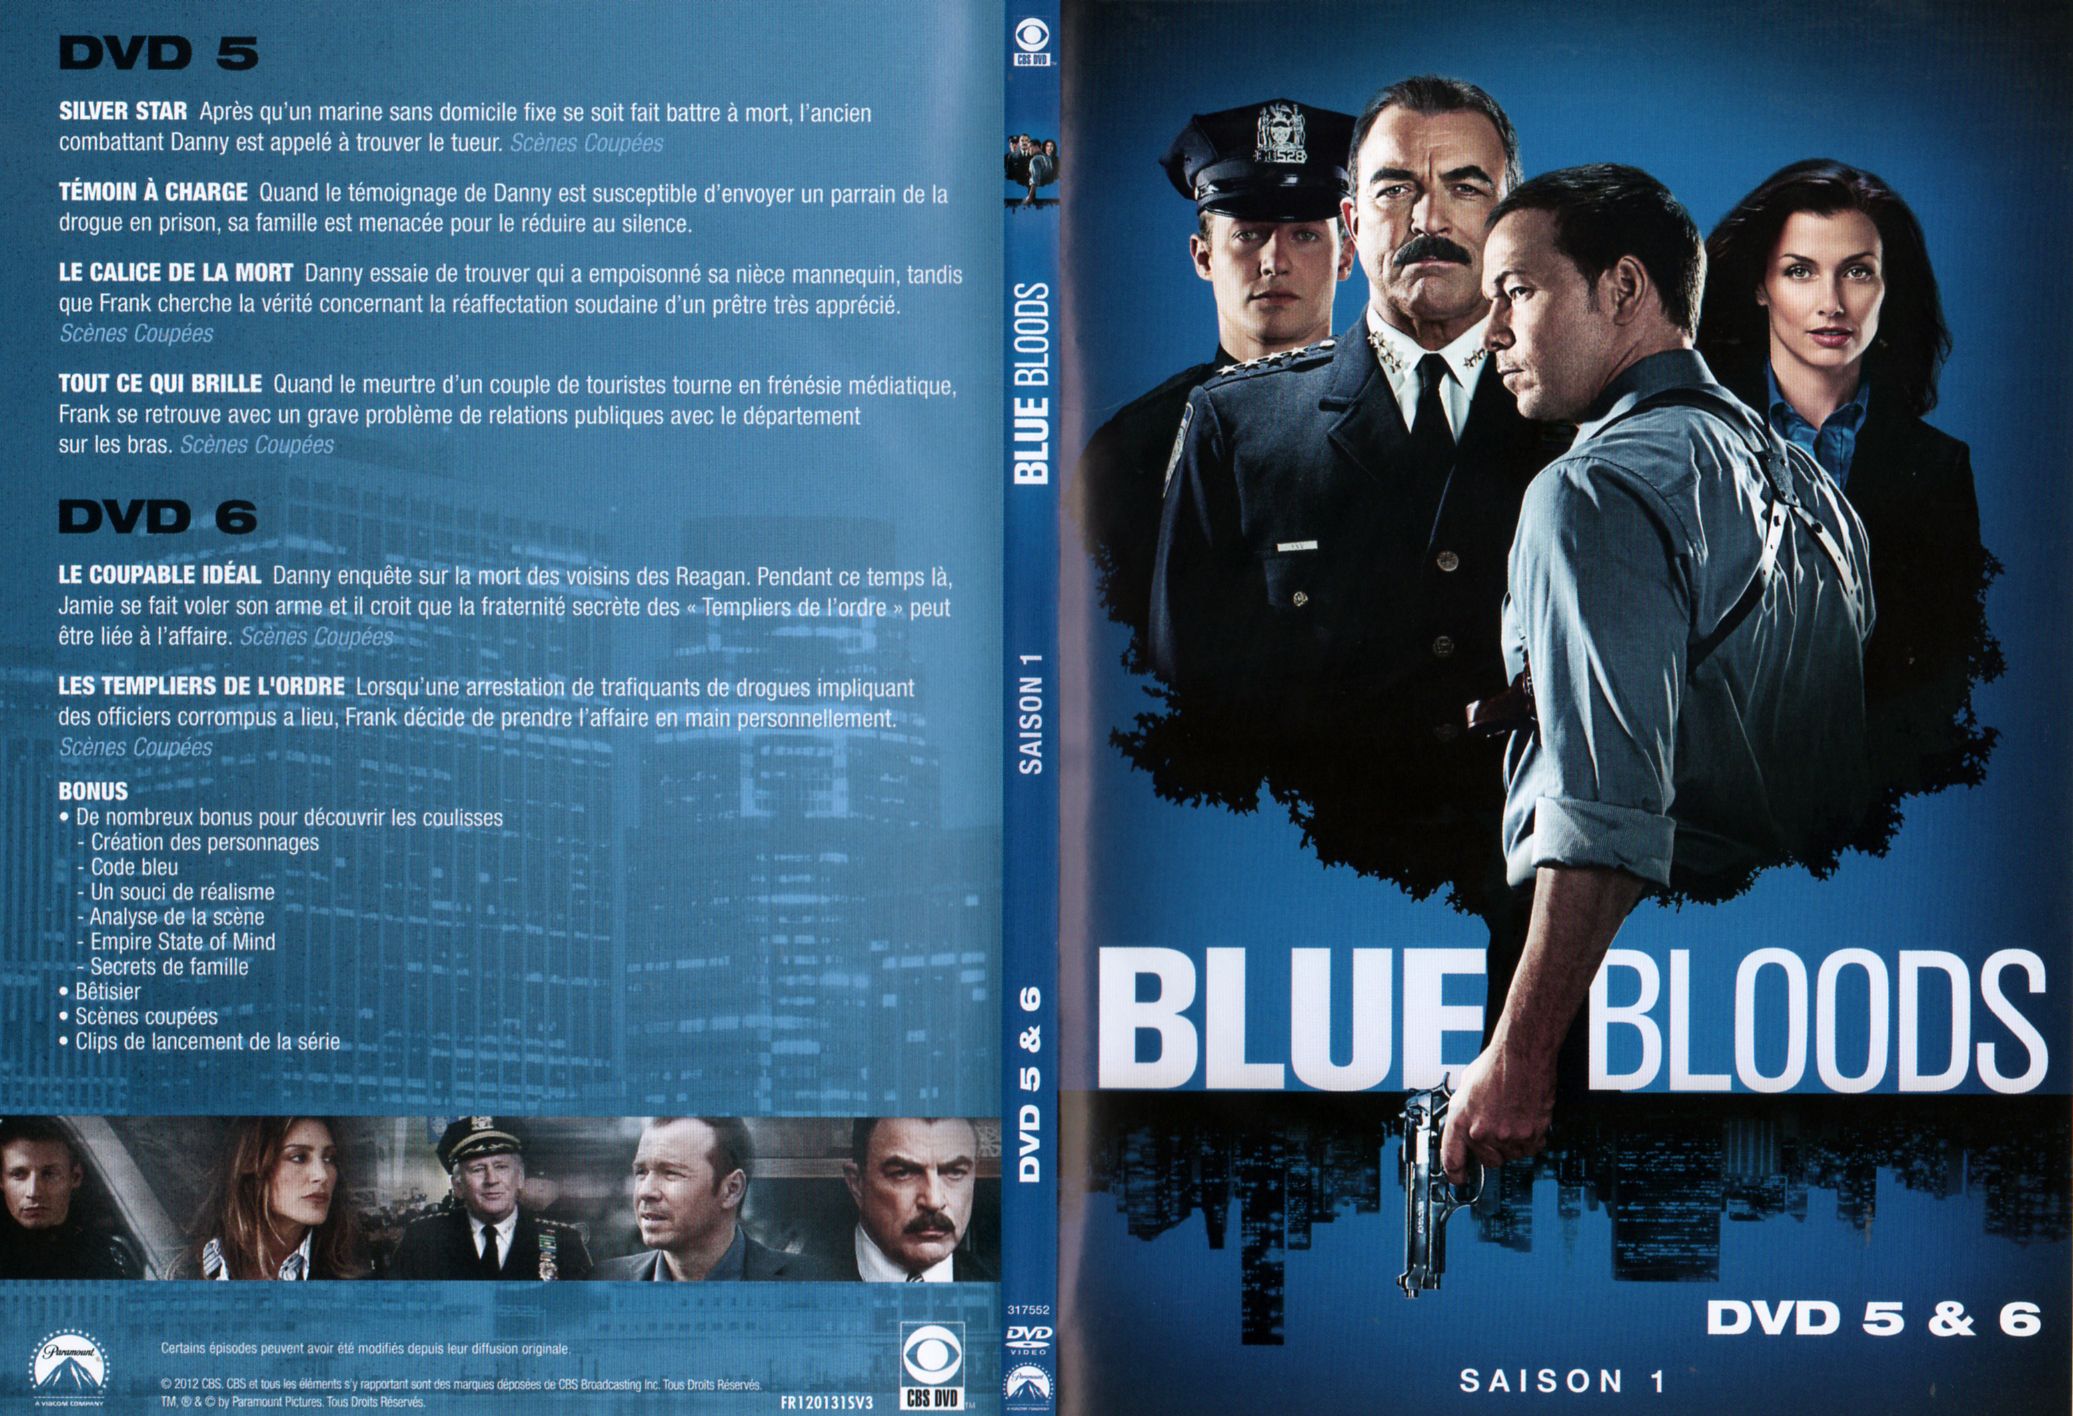 Jaquette DVD Blue Bloods Saison 1 DVD 3